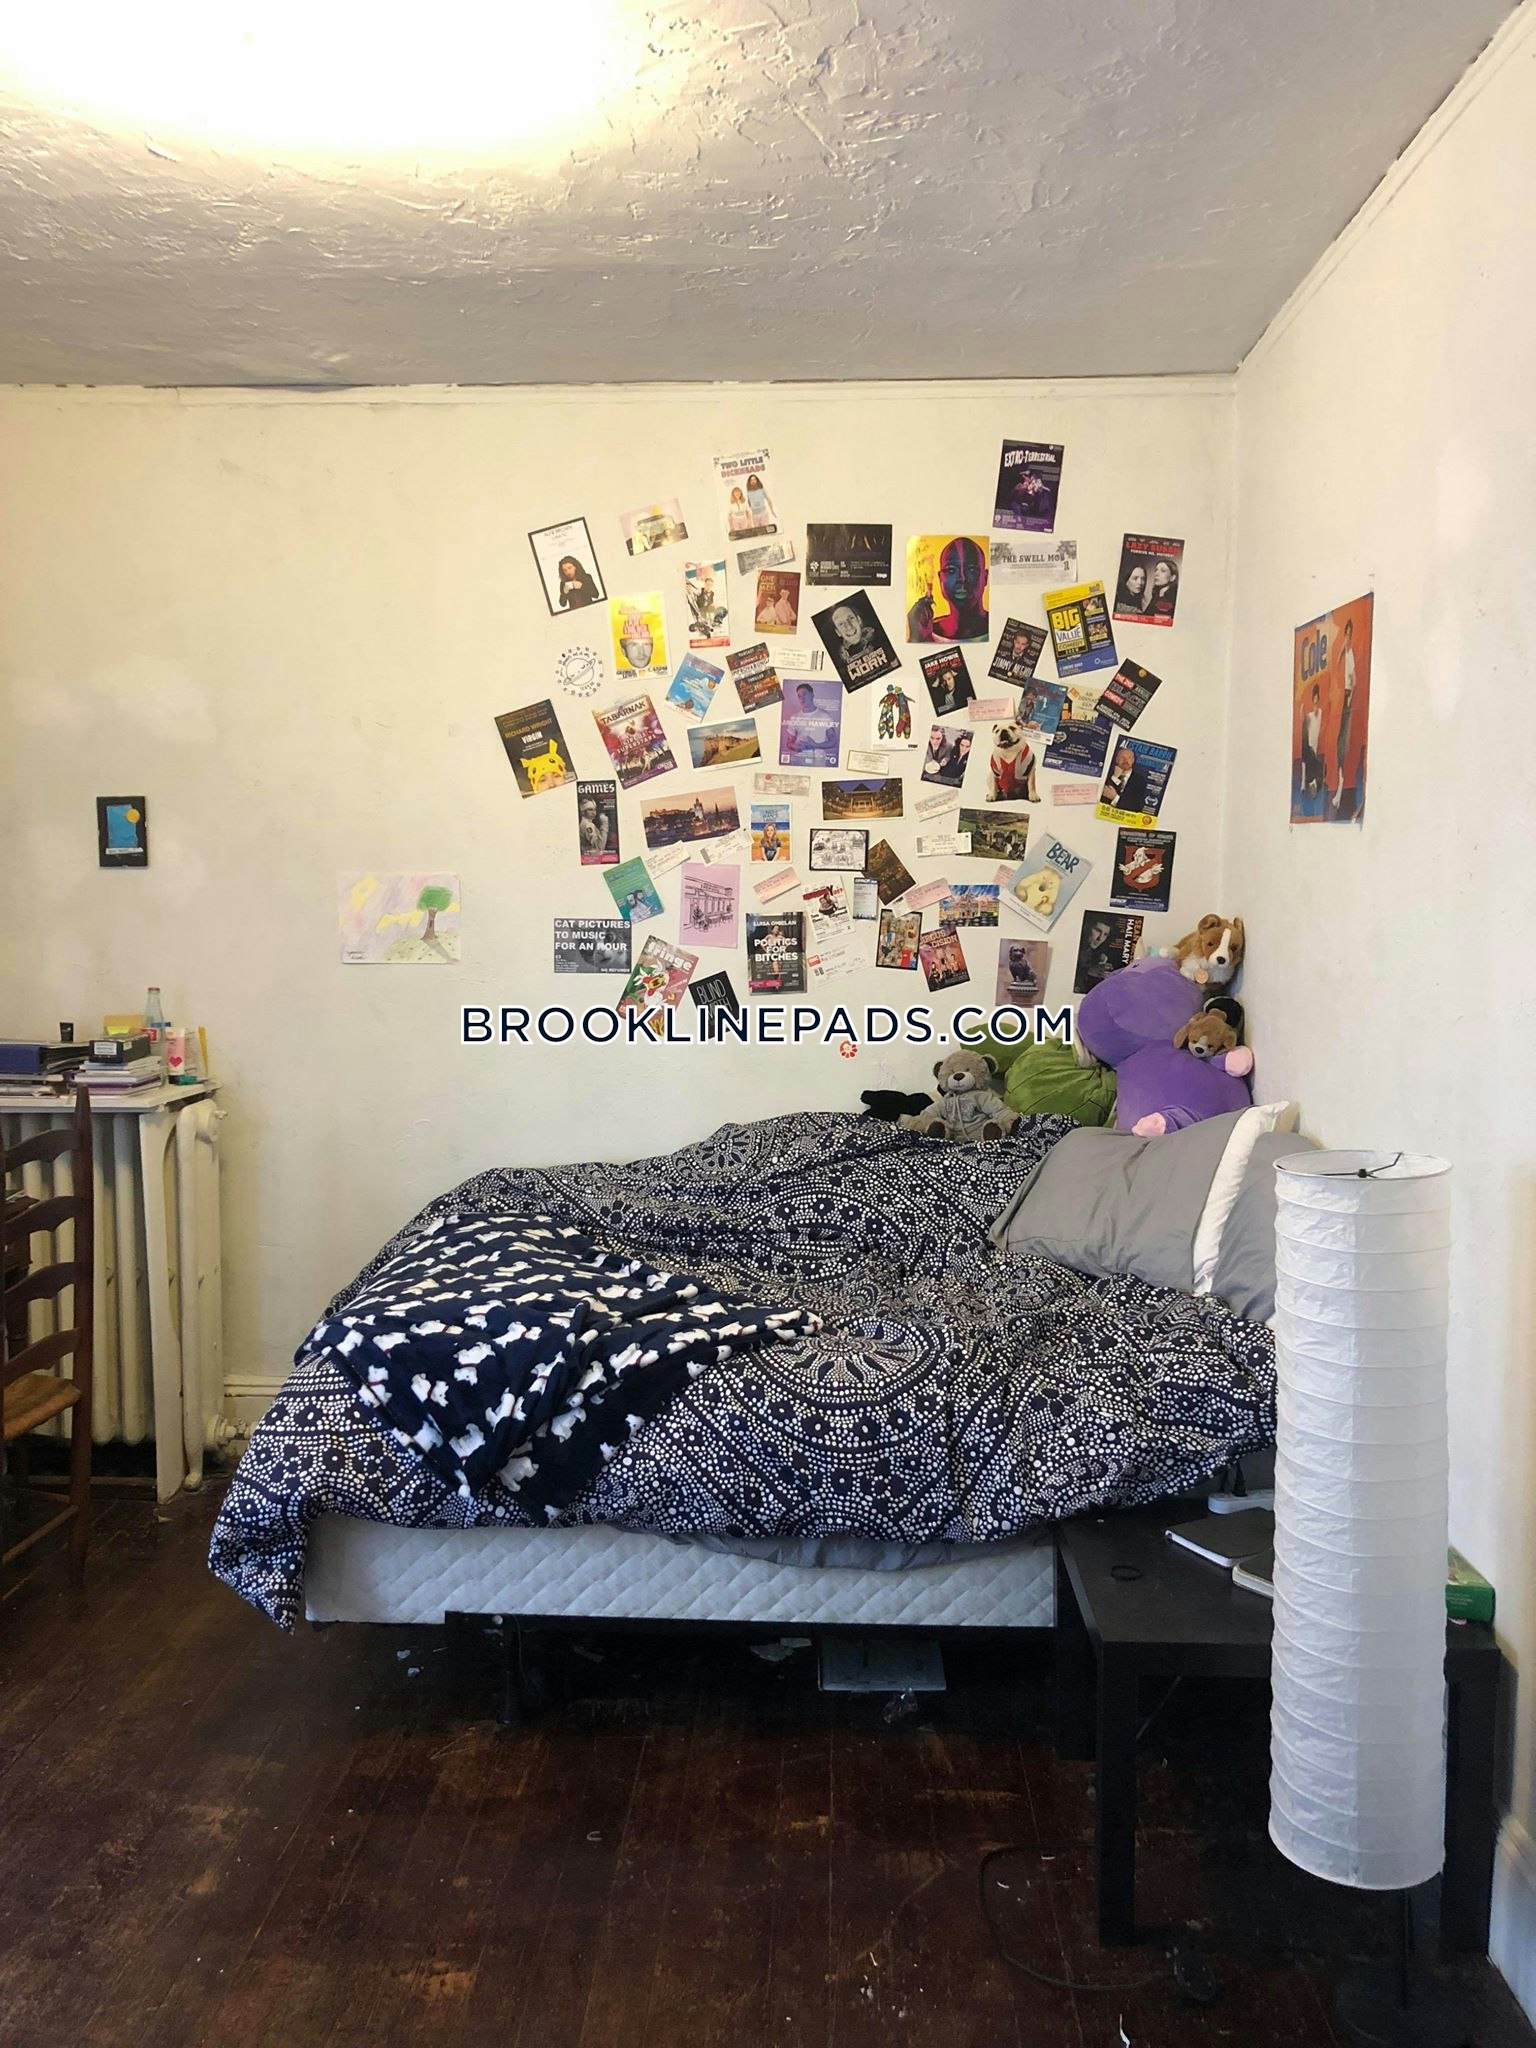 Brookline - $3,300